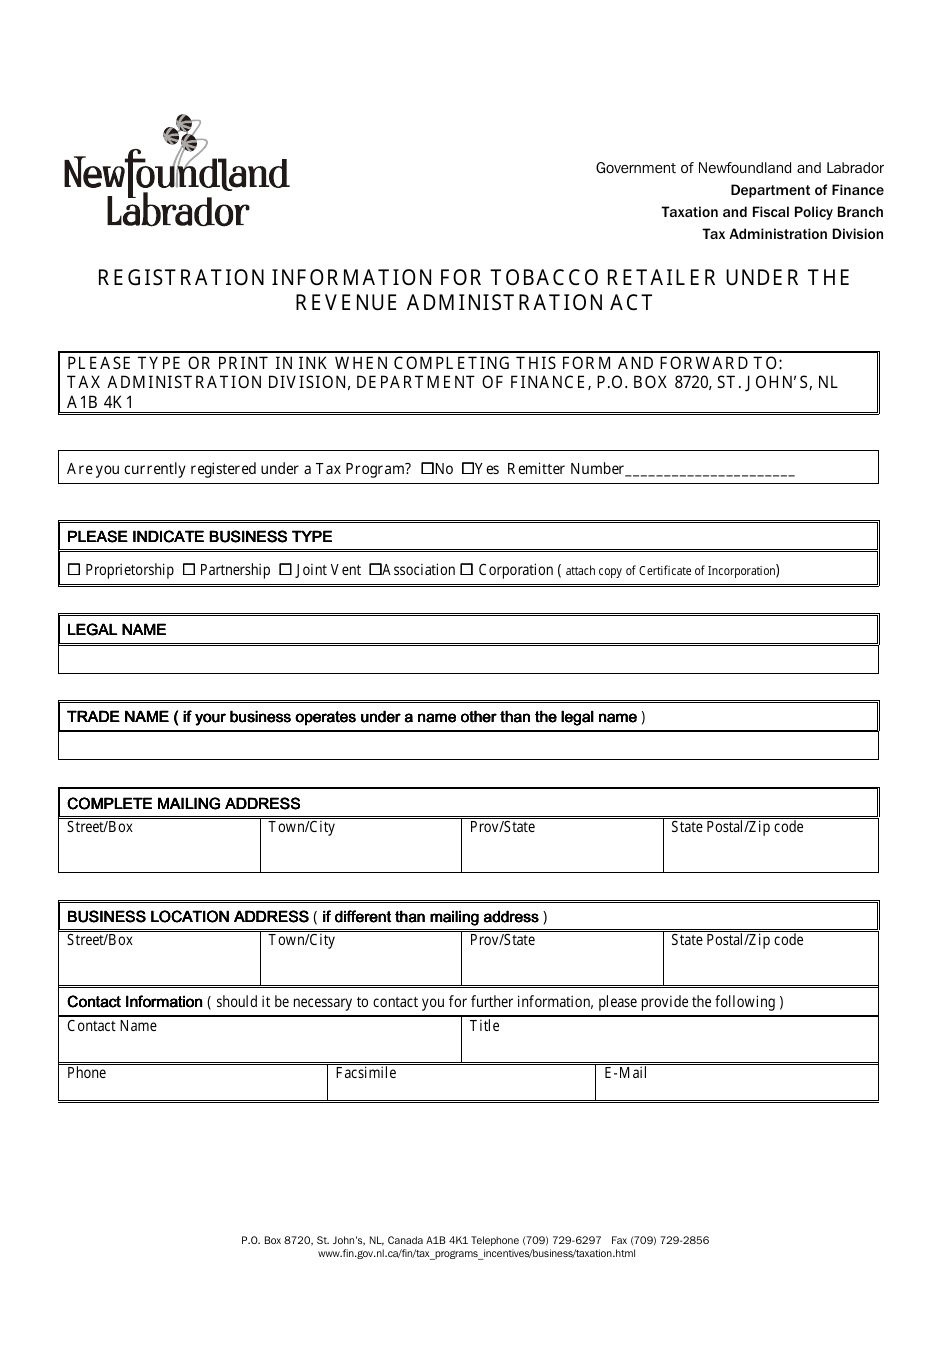 Registration Information for Tobacco Retailer Under the Revenue Administration Act - Newfoundland and Labrador, Canada, Page 1